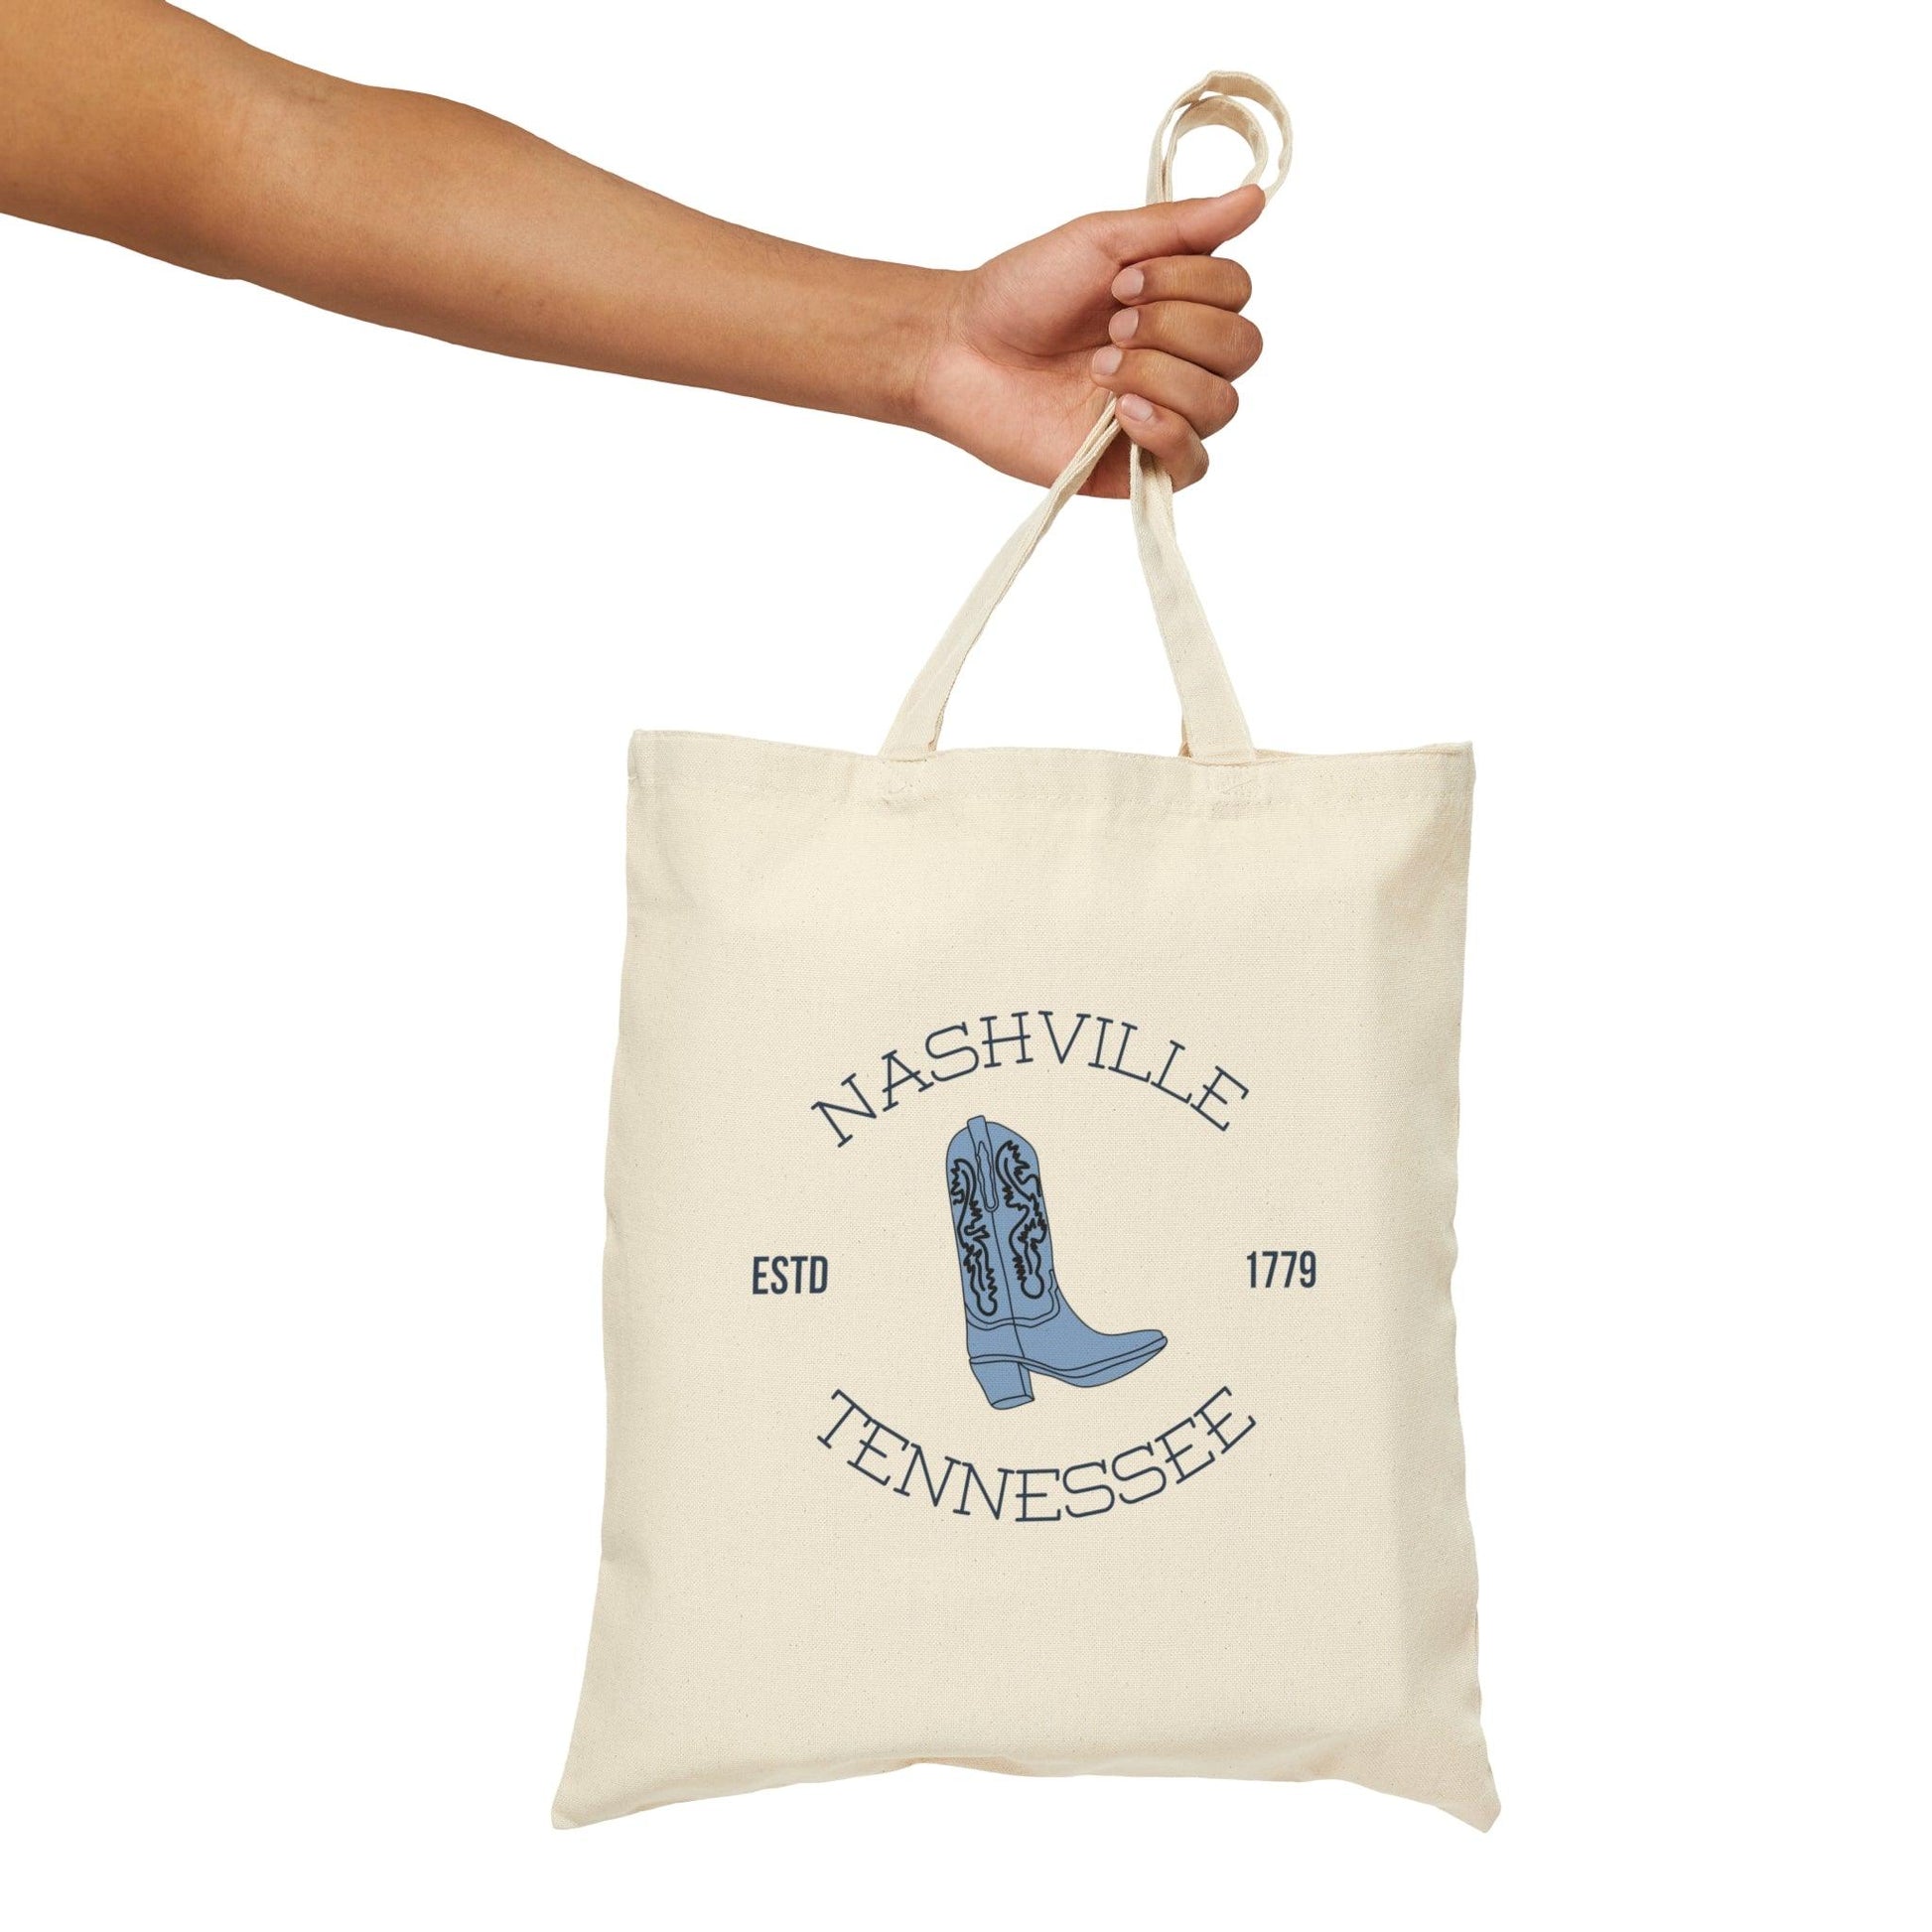 Nashville Tennessee Canvas Tote Bag - Departures Print Shop